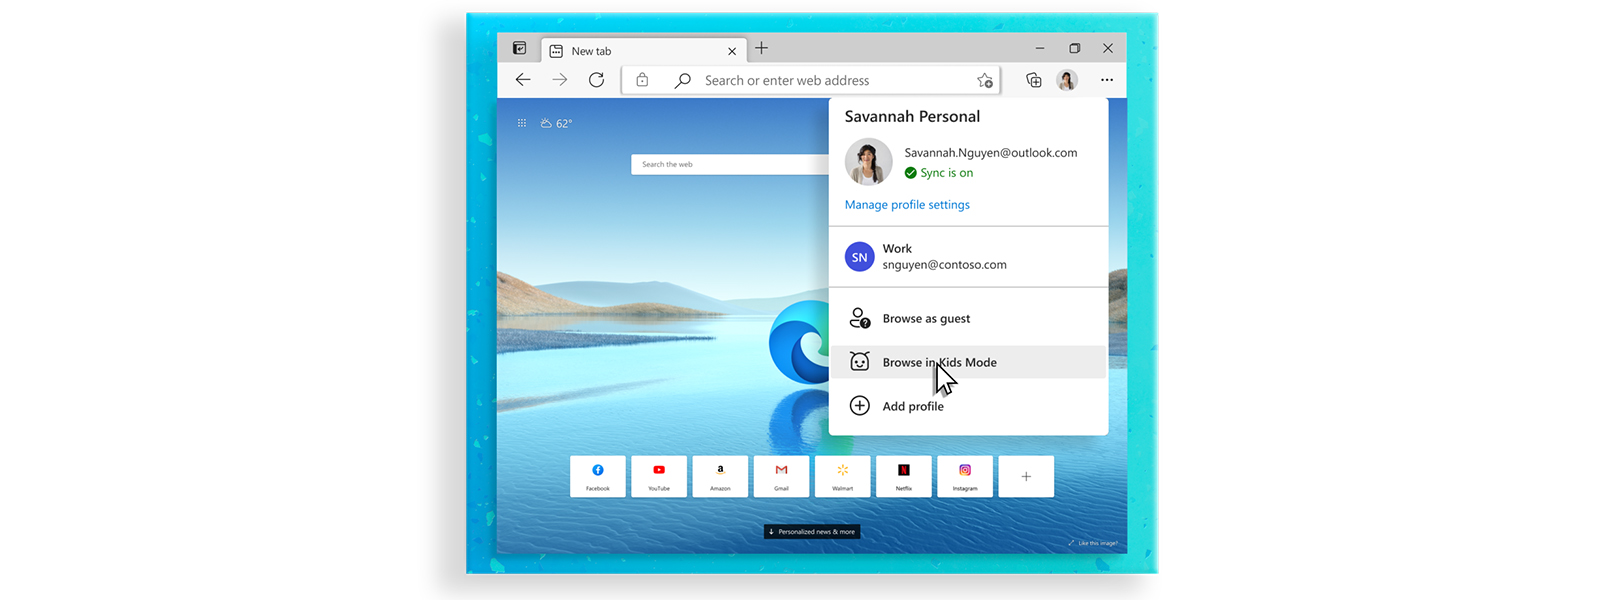 Microsoft Edge browser homescreen showing account options menu